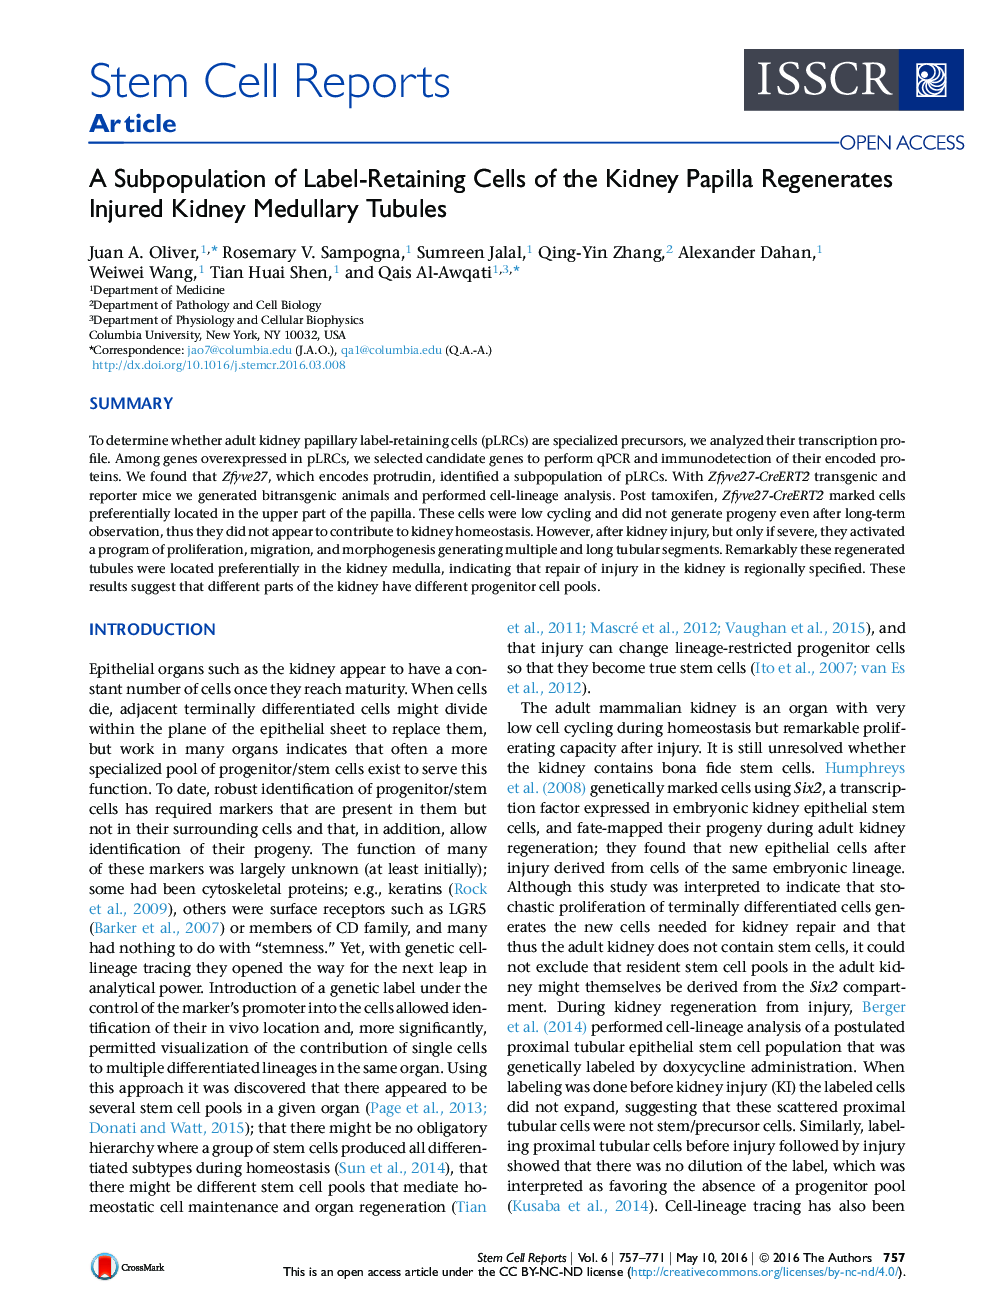 A Subpopulation of Label-Retaining Cells of the Kidney Papilla Regenerates Injured Kidney Medullary Tubules